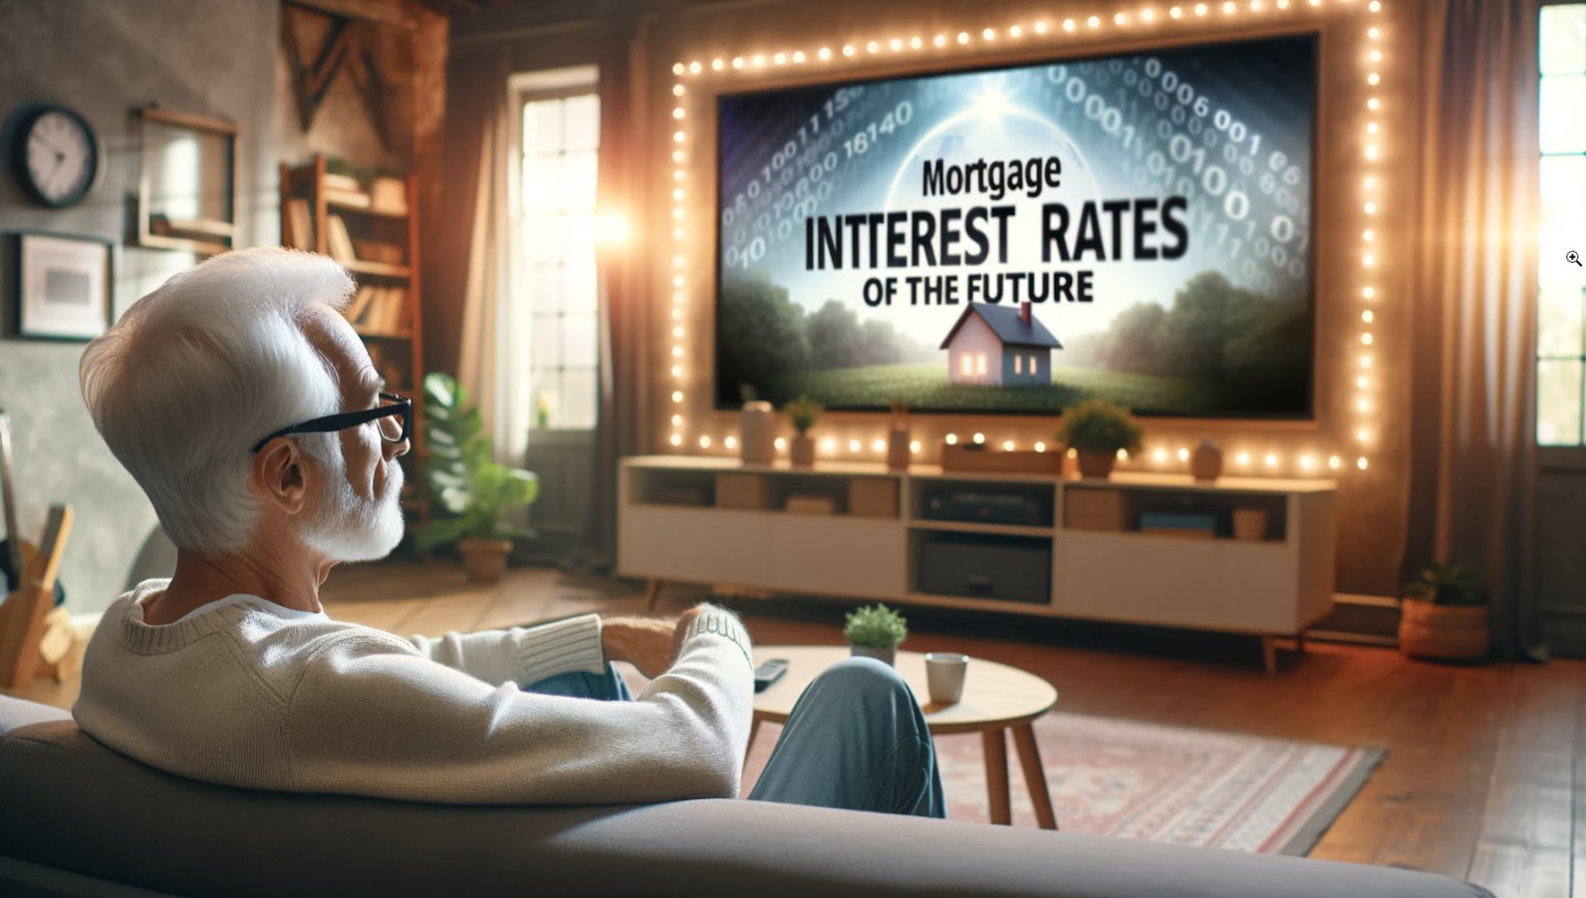 reverse mortgage interest rates